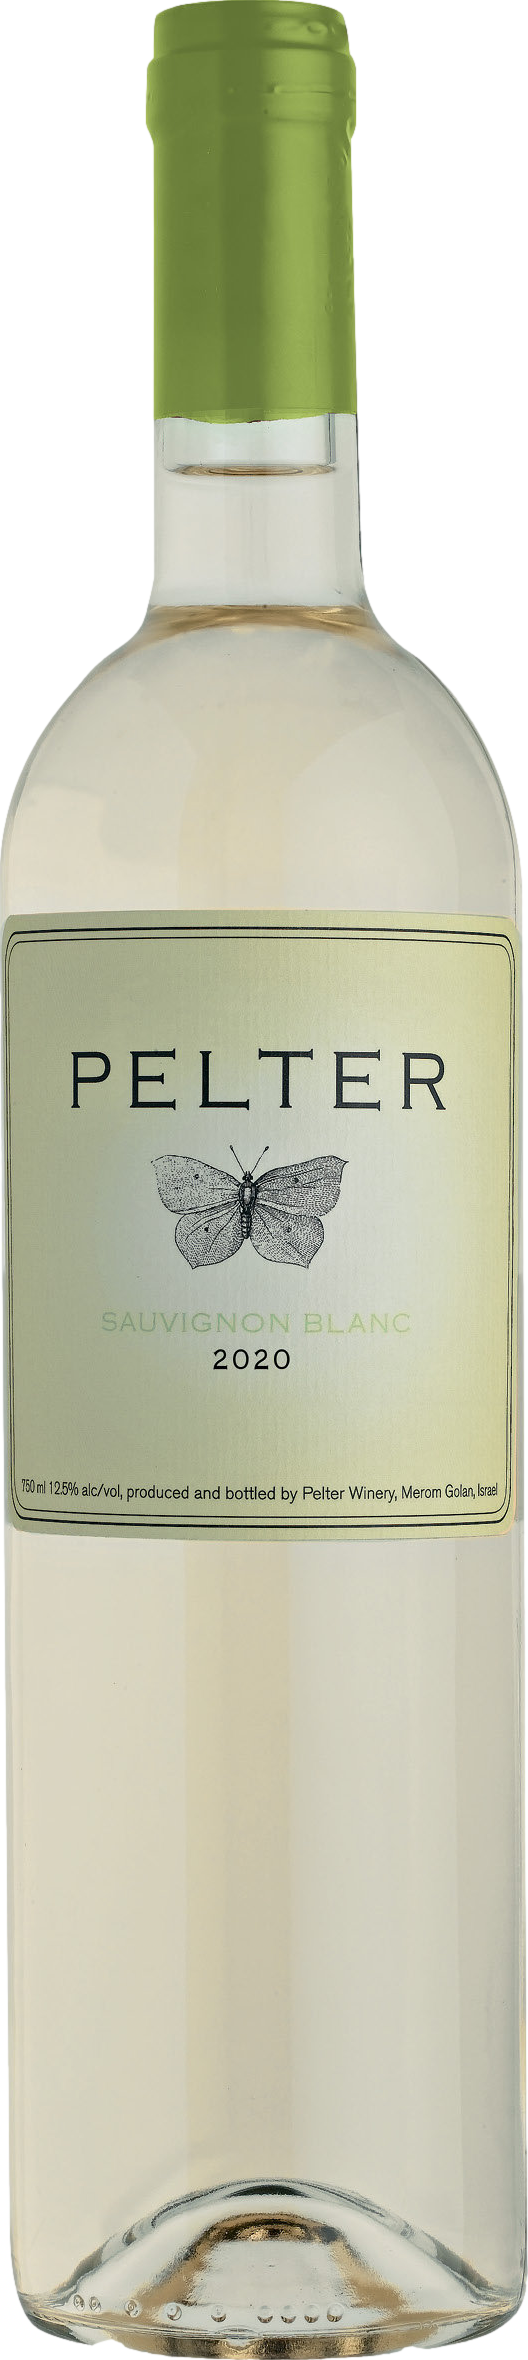 Pelter Sauvignon Blanc 2020